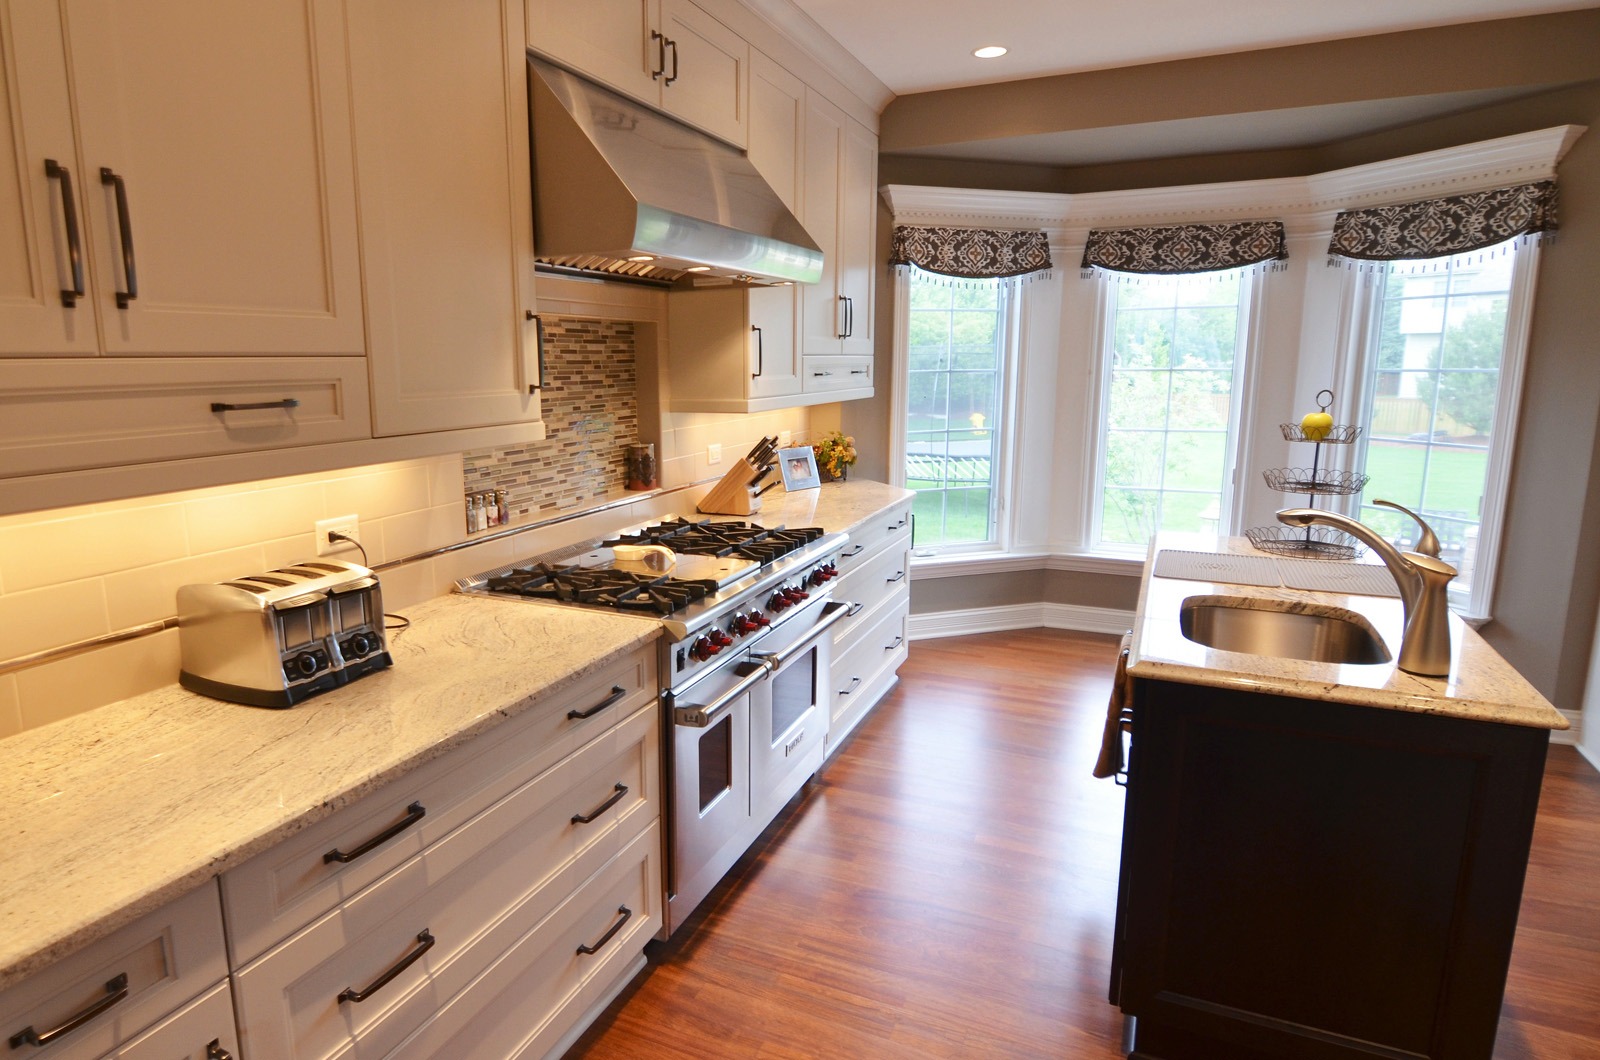 the kitchen master renovation galley kitchen white cabinets quartz countertops tall bay windows